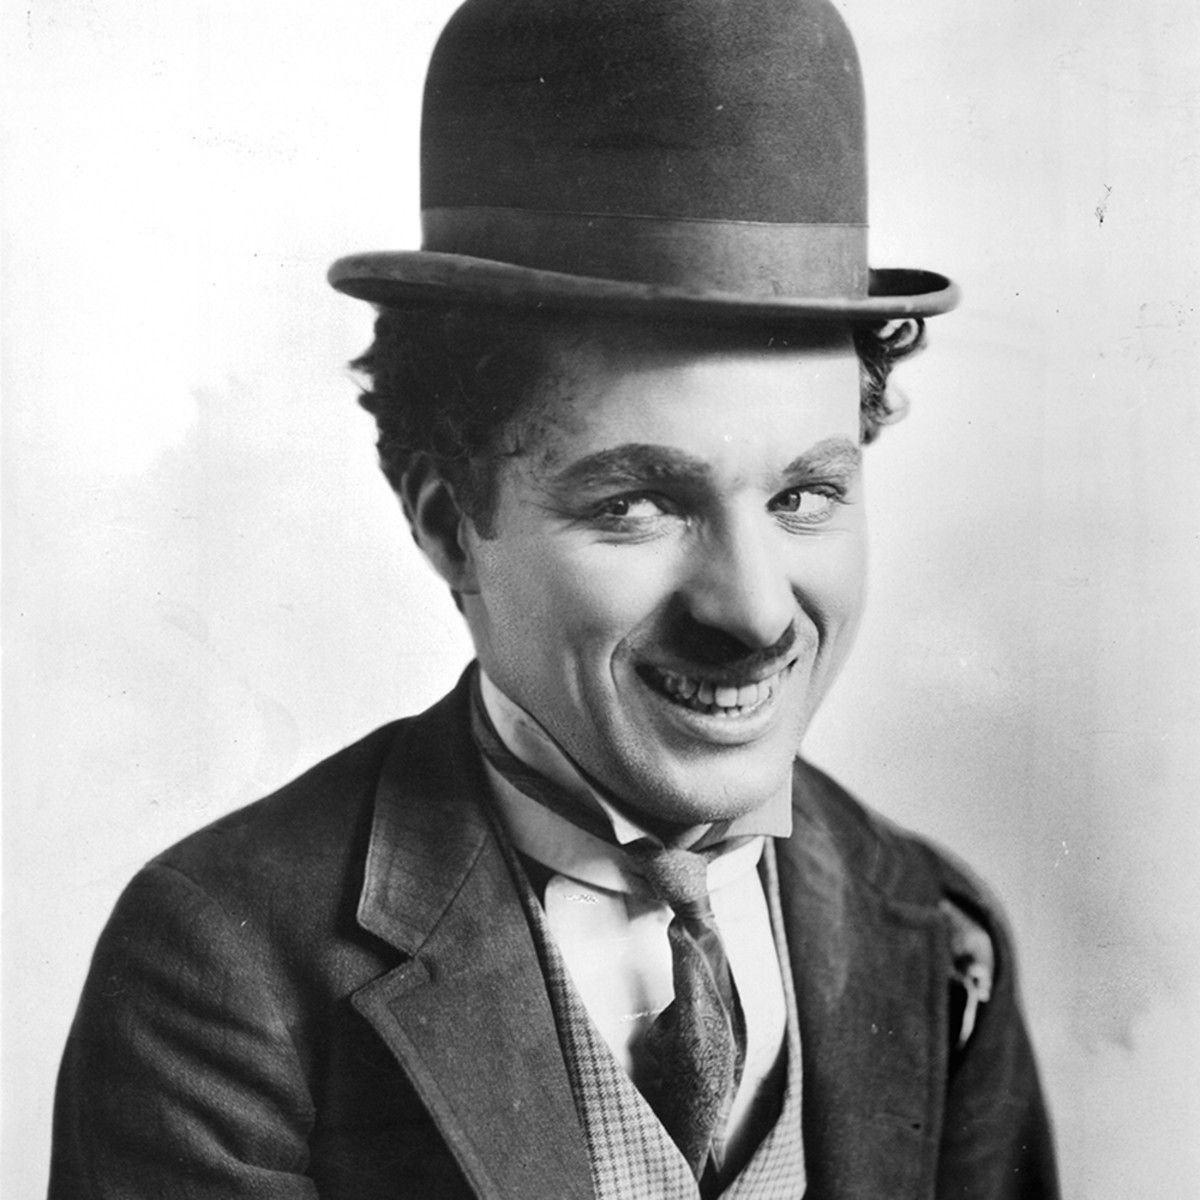 CWG 2022: Chaplin honoured in opening ceremony, but is he from Birmingham?